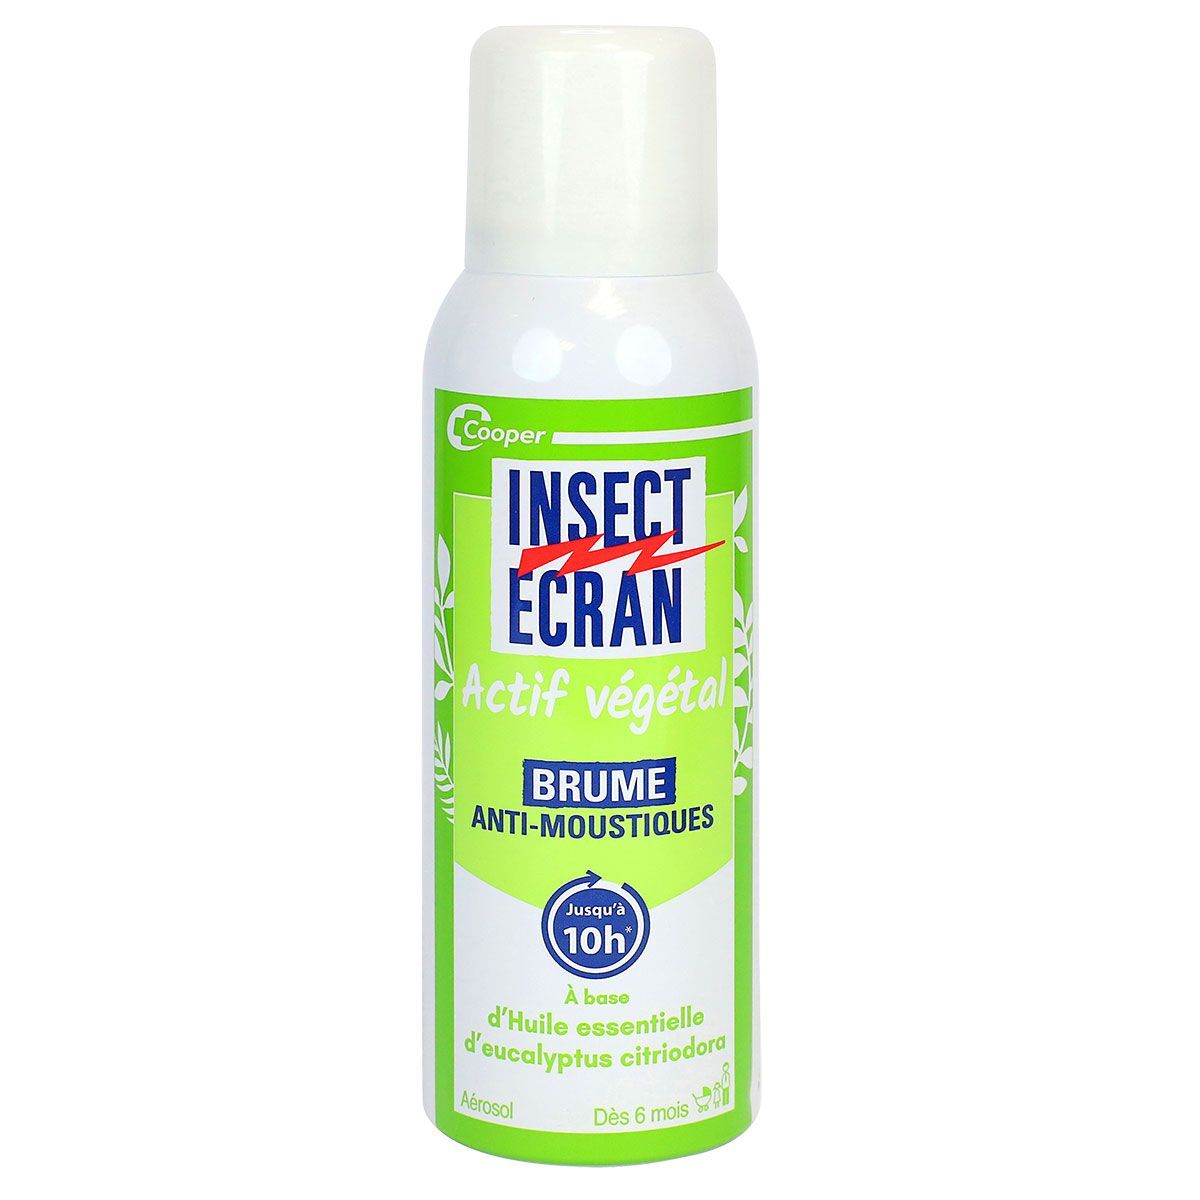 Insect ecran Zones infestées 100ml Cooper INSECT ECRAN